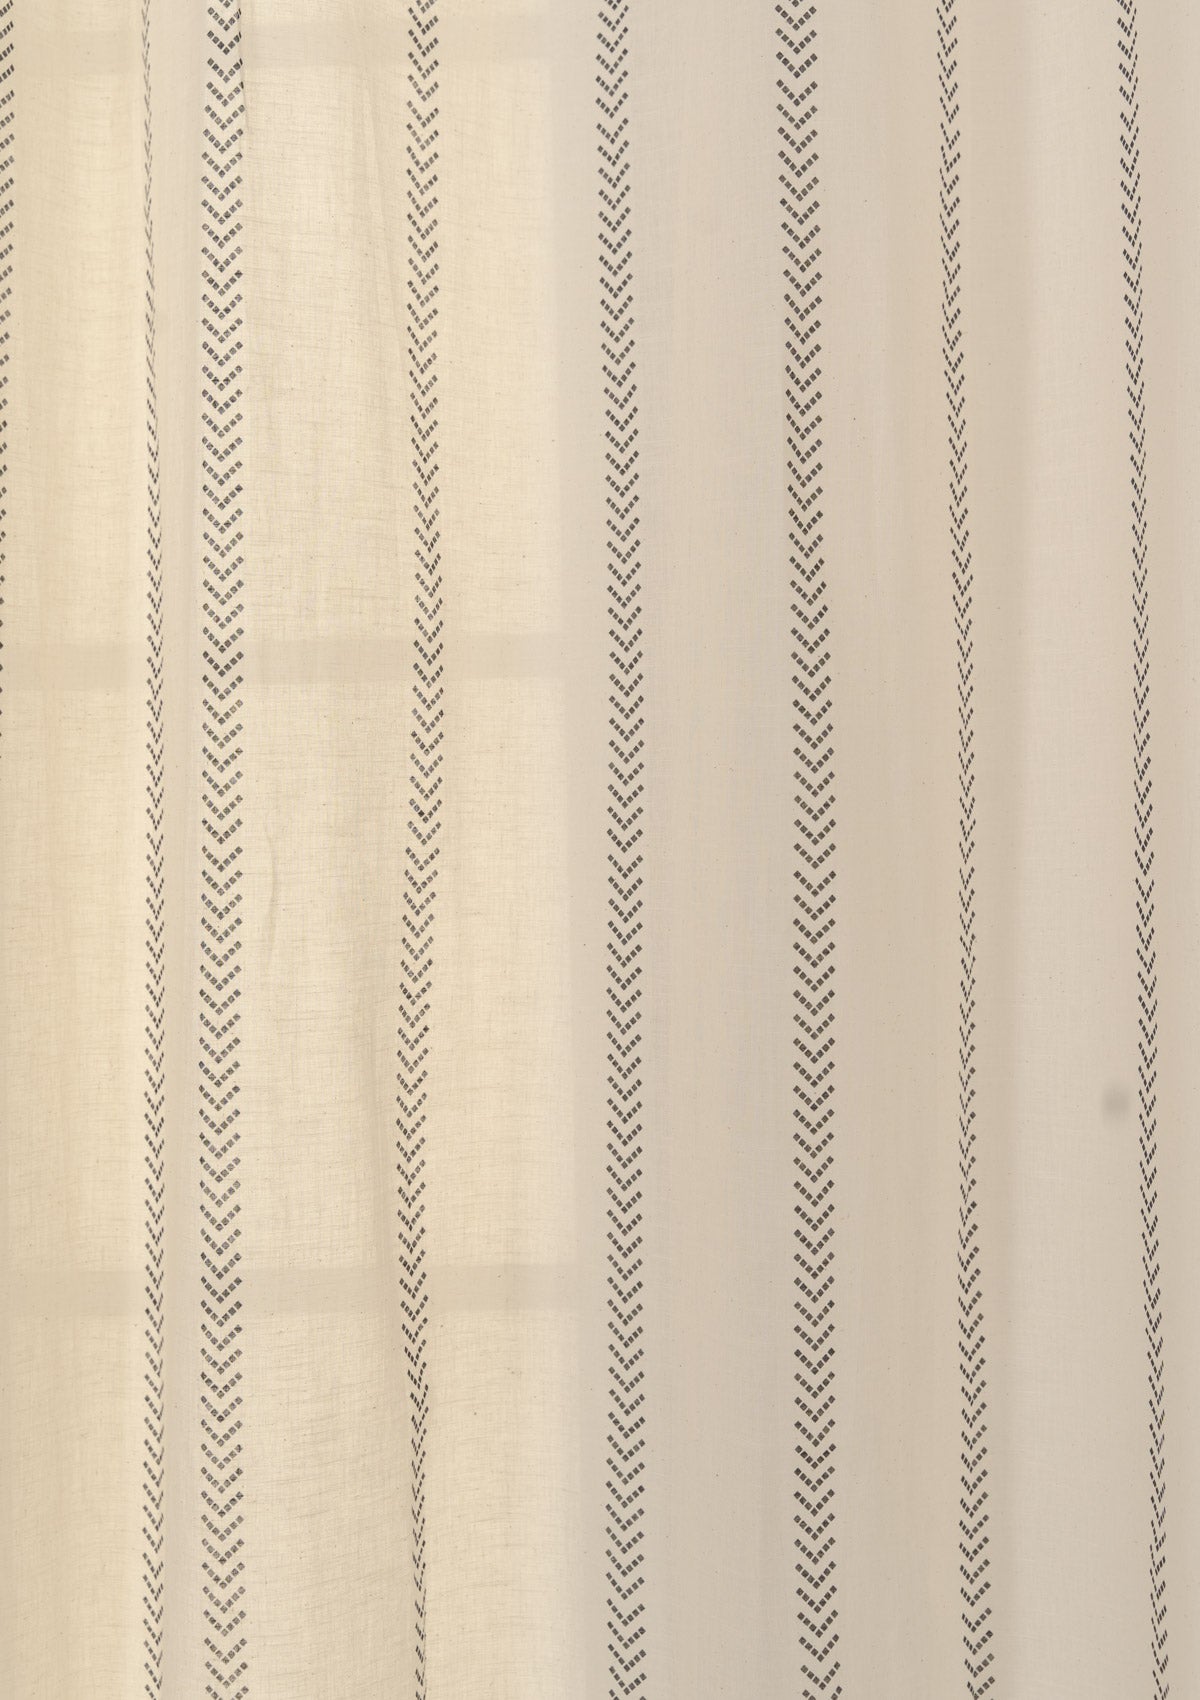 Spear 100% cotton geometric sheer curtain for living room - Light filtering - Black - Single